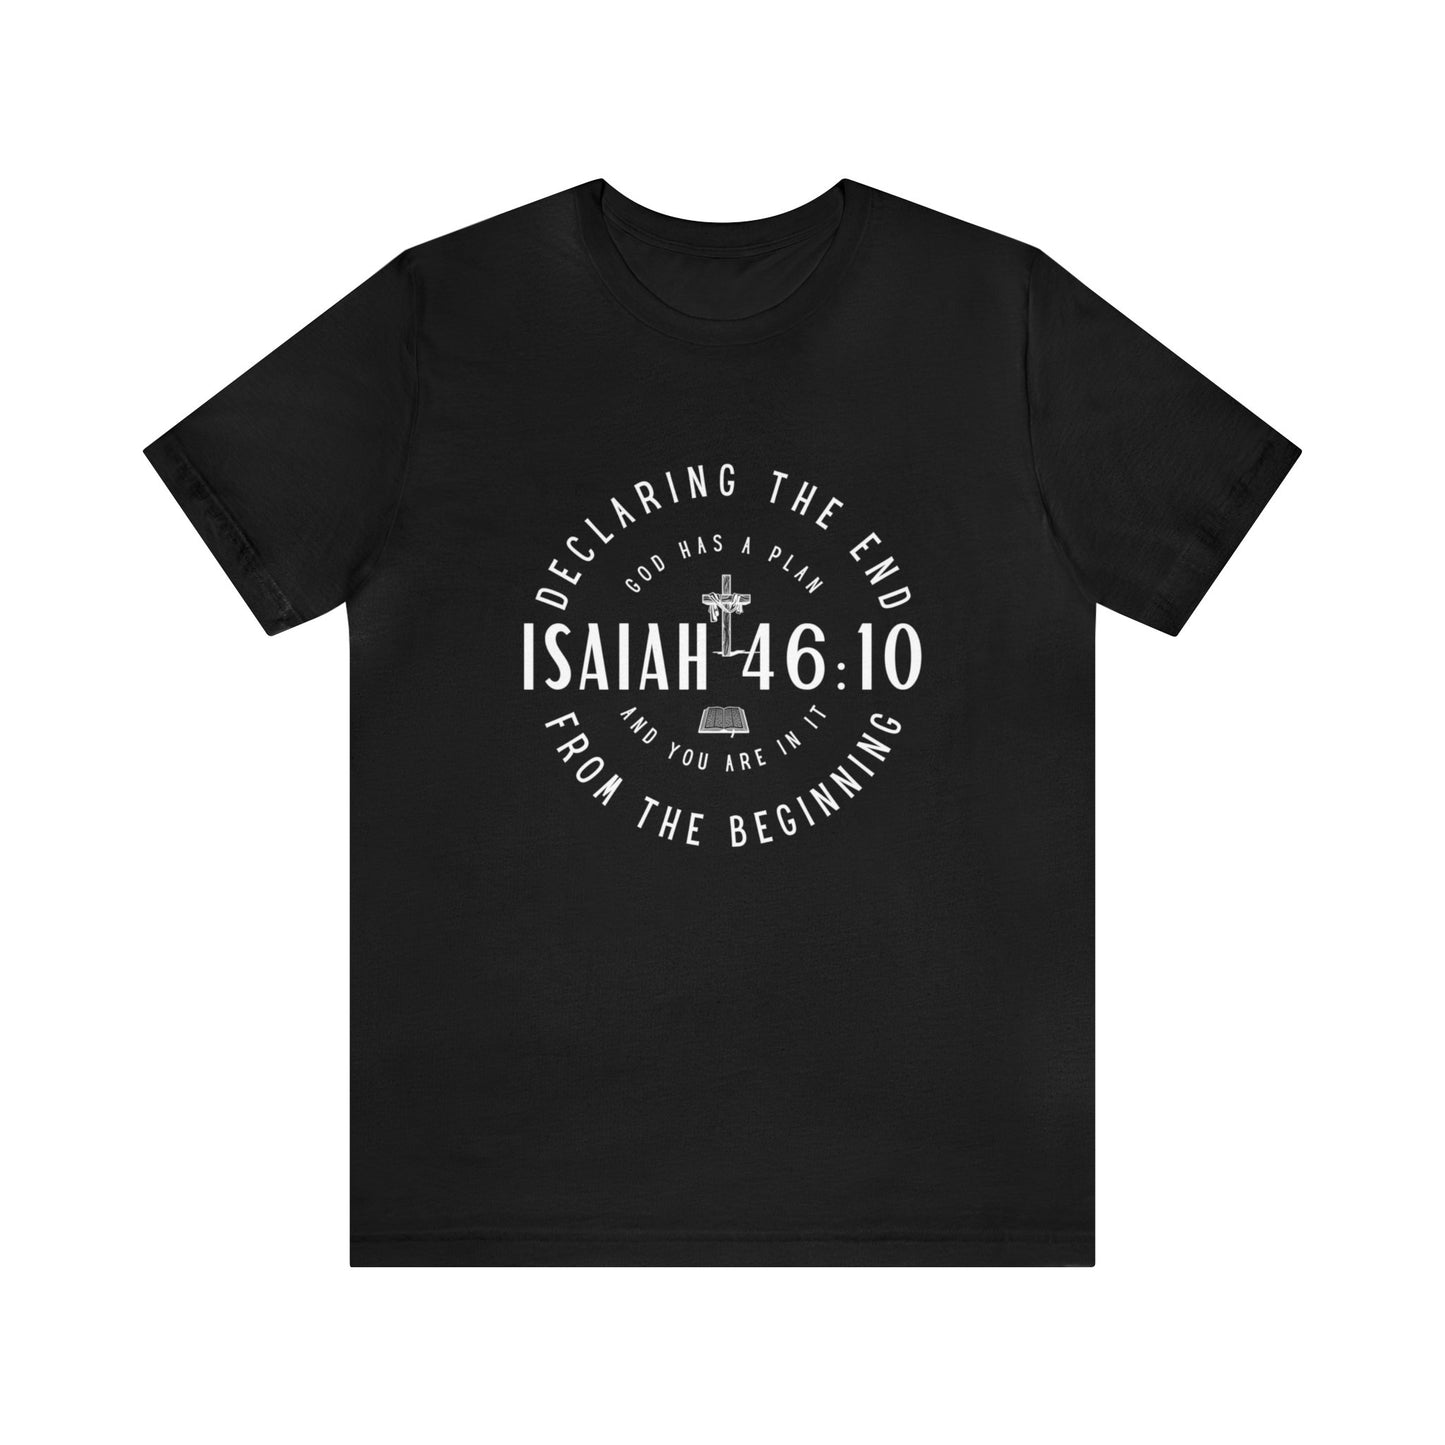 ISAIAH 46:10, Express Shipping, Christian T-shirt for Men and Women